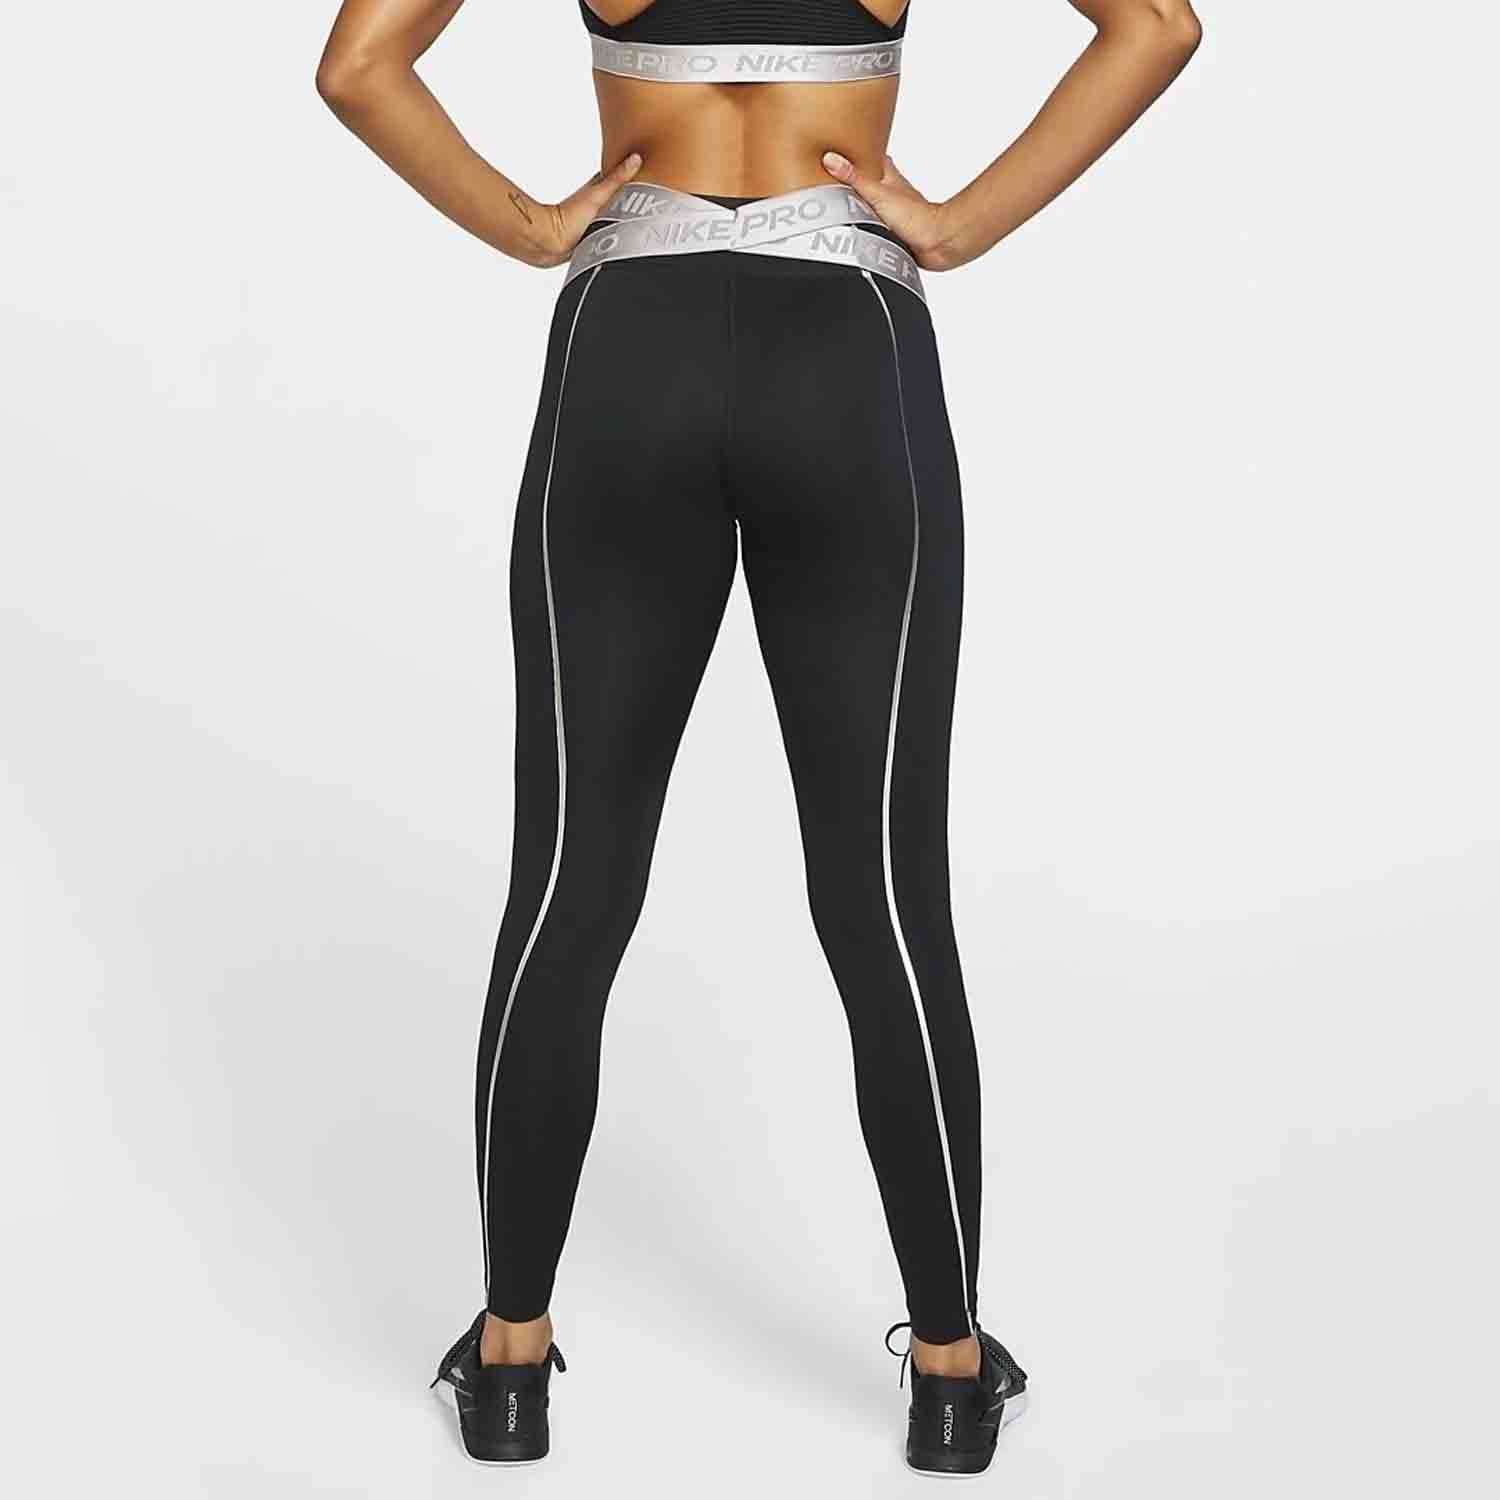 Nike Women's Dri-Fit Pro Recovery Hypertight Running Tights-Black/NeonGreen